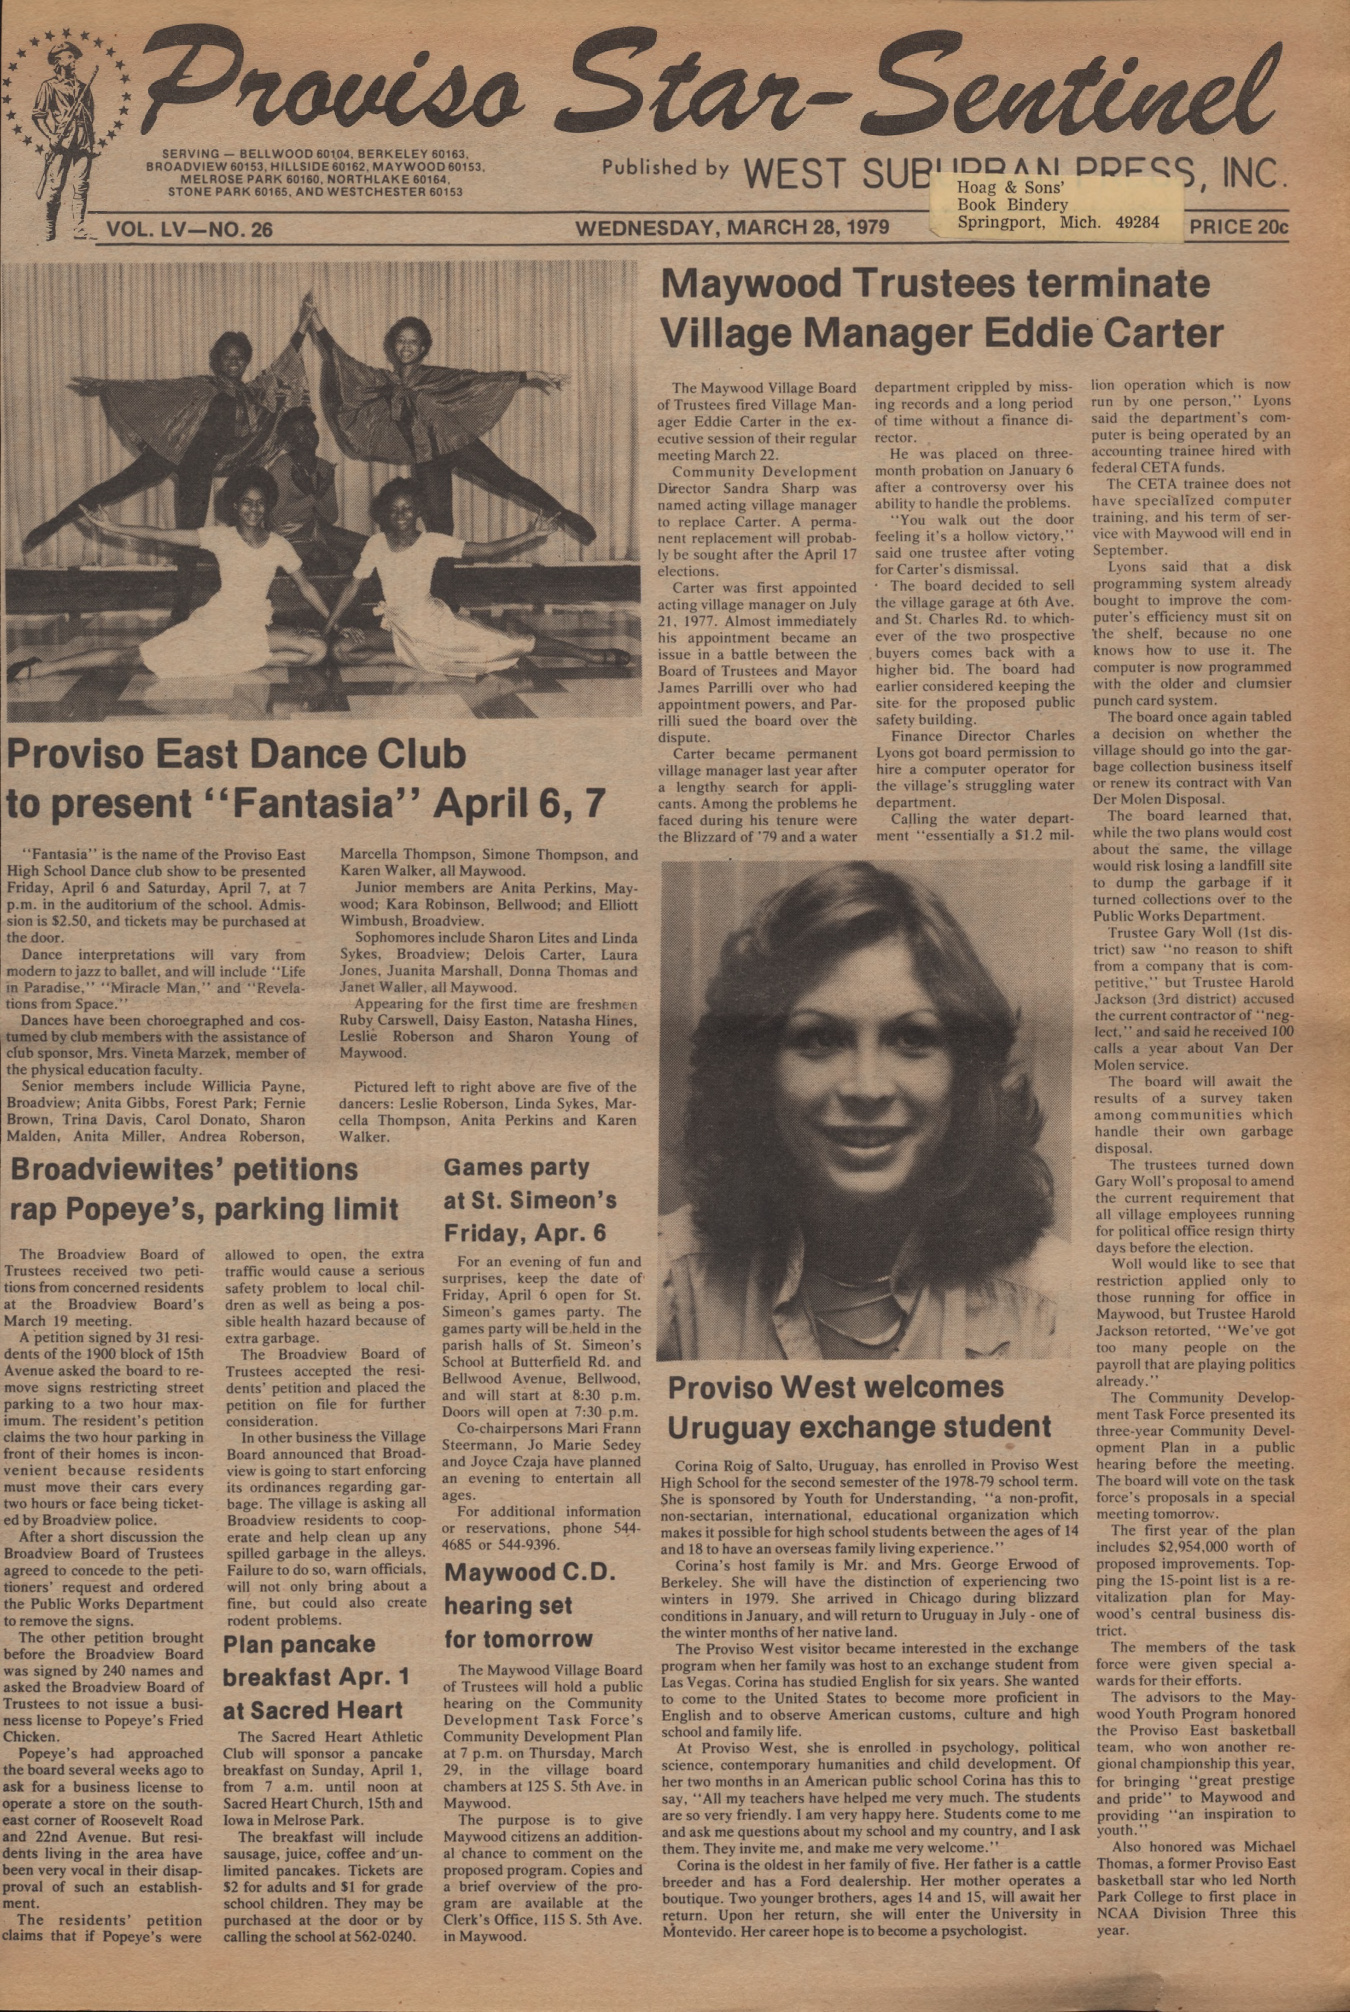 Proviso Star-Sentinel – 19790328